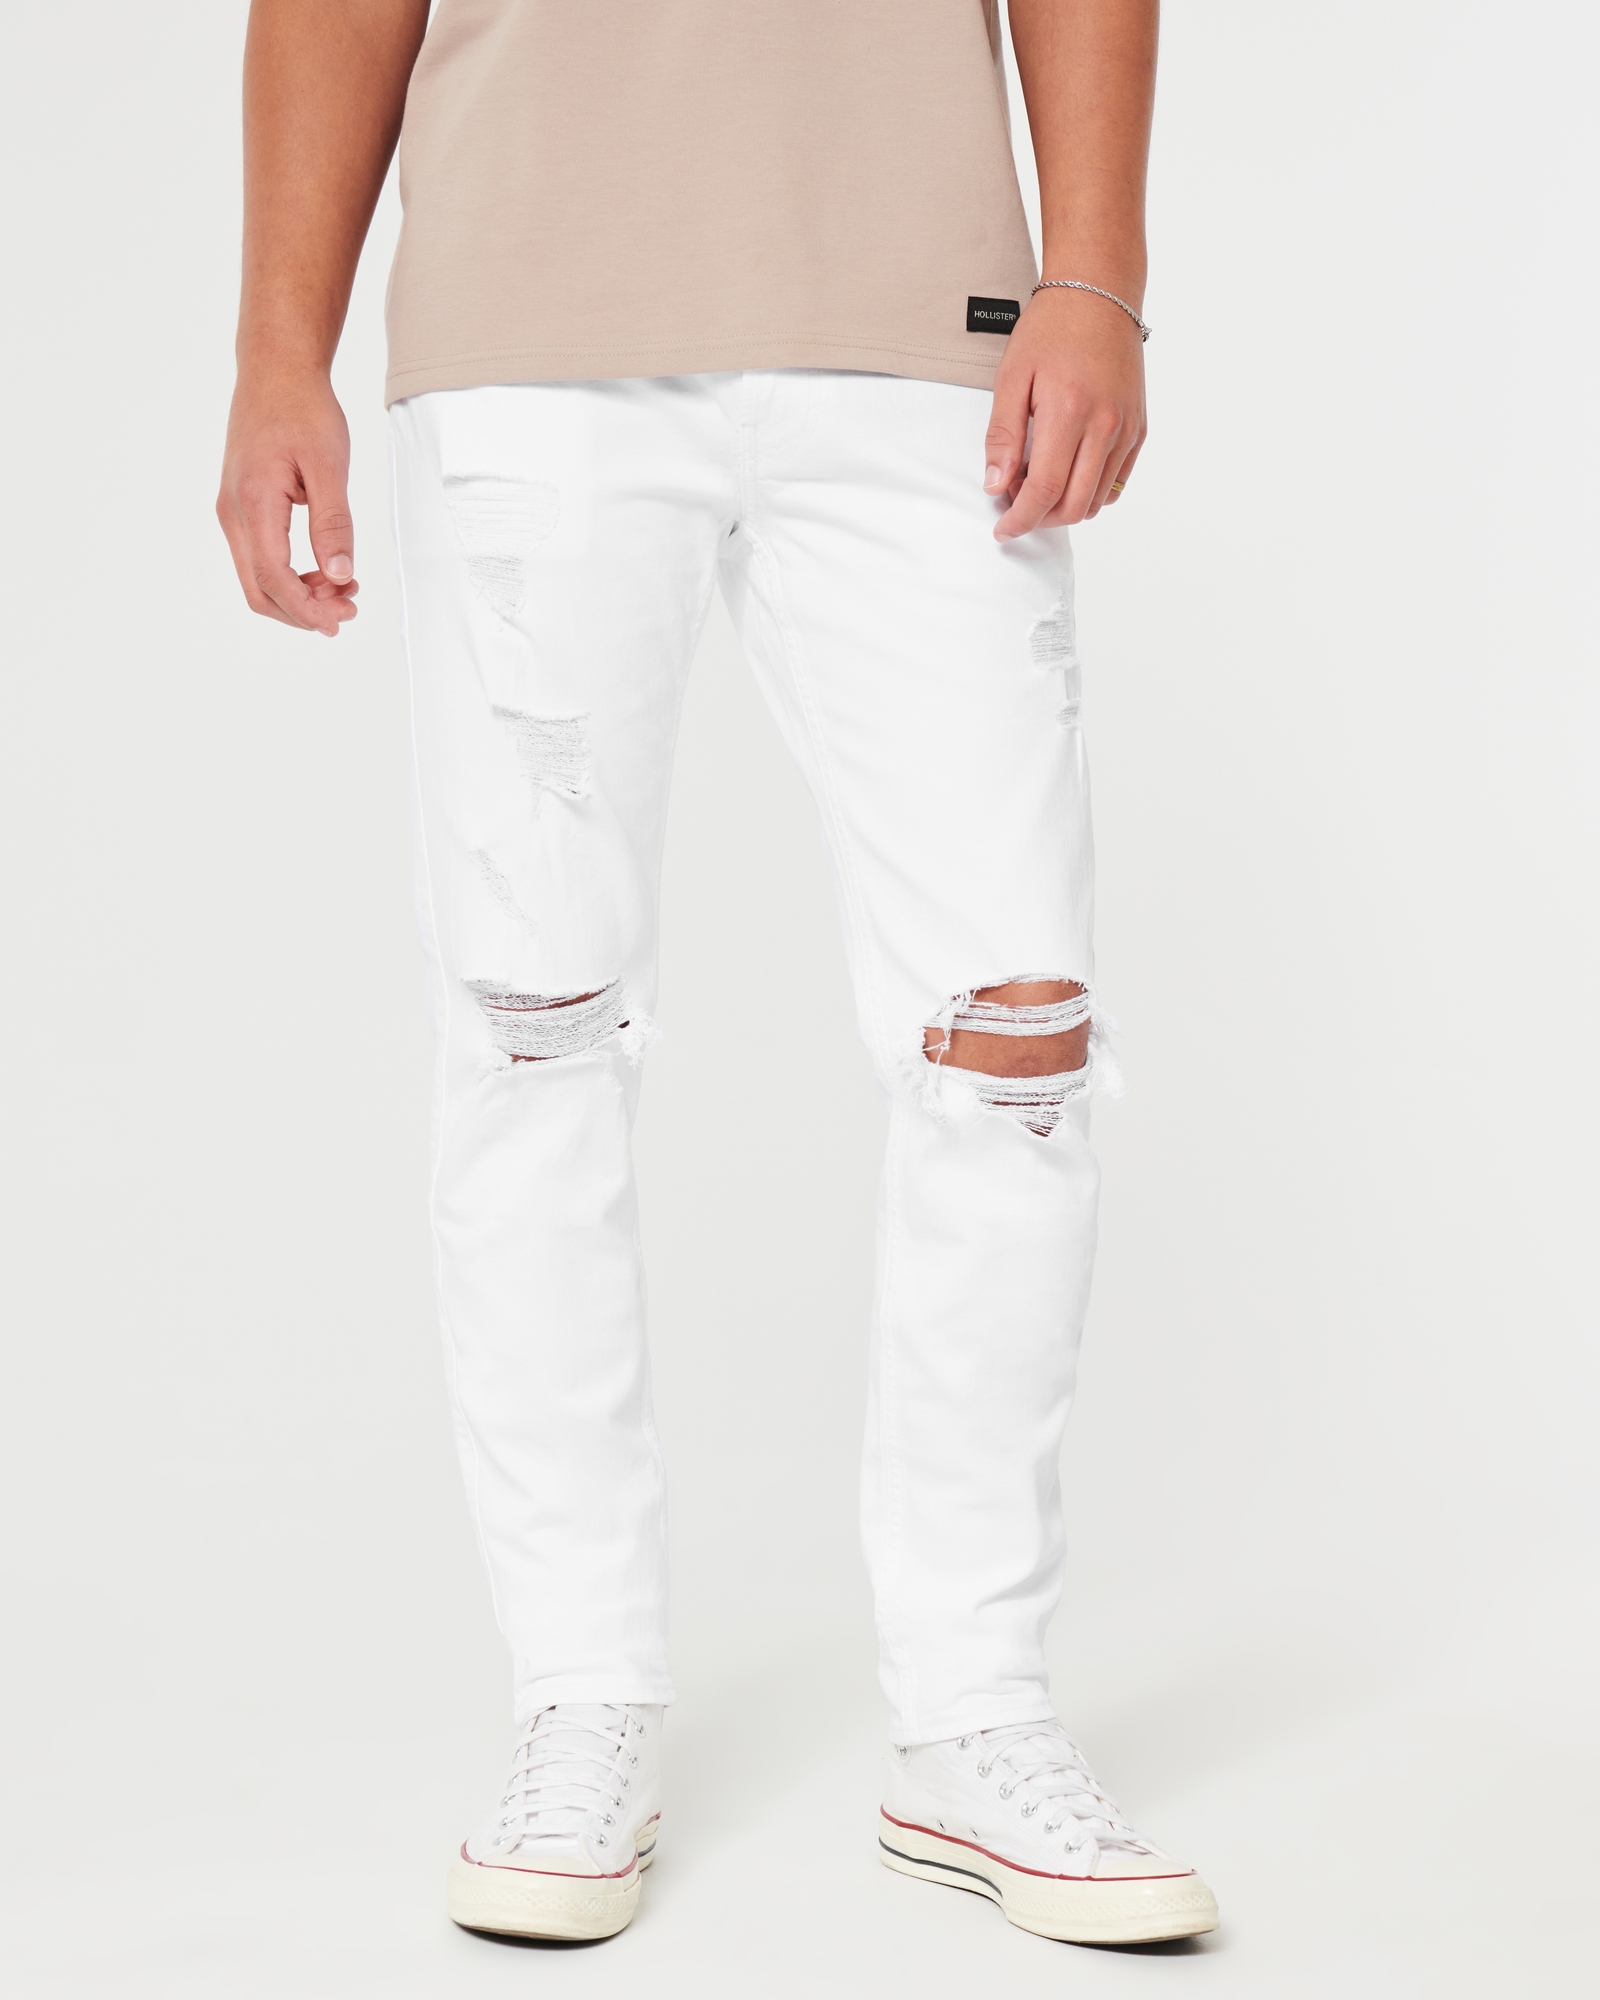 Men's Ripped White Skinny Jeans, Men's Clearance